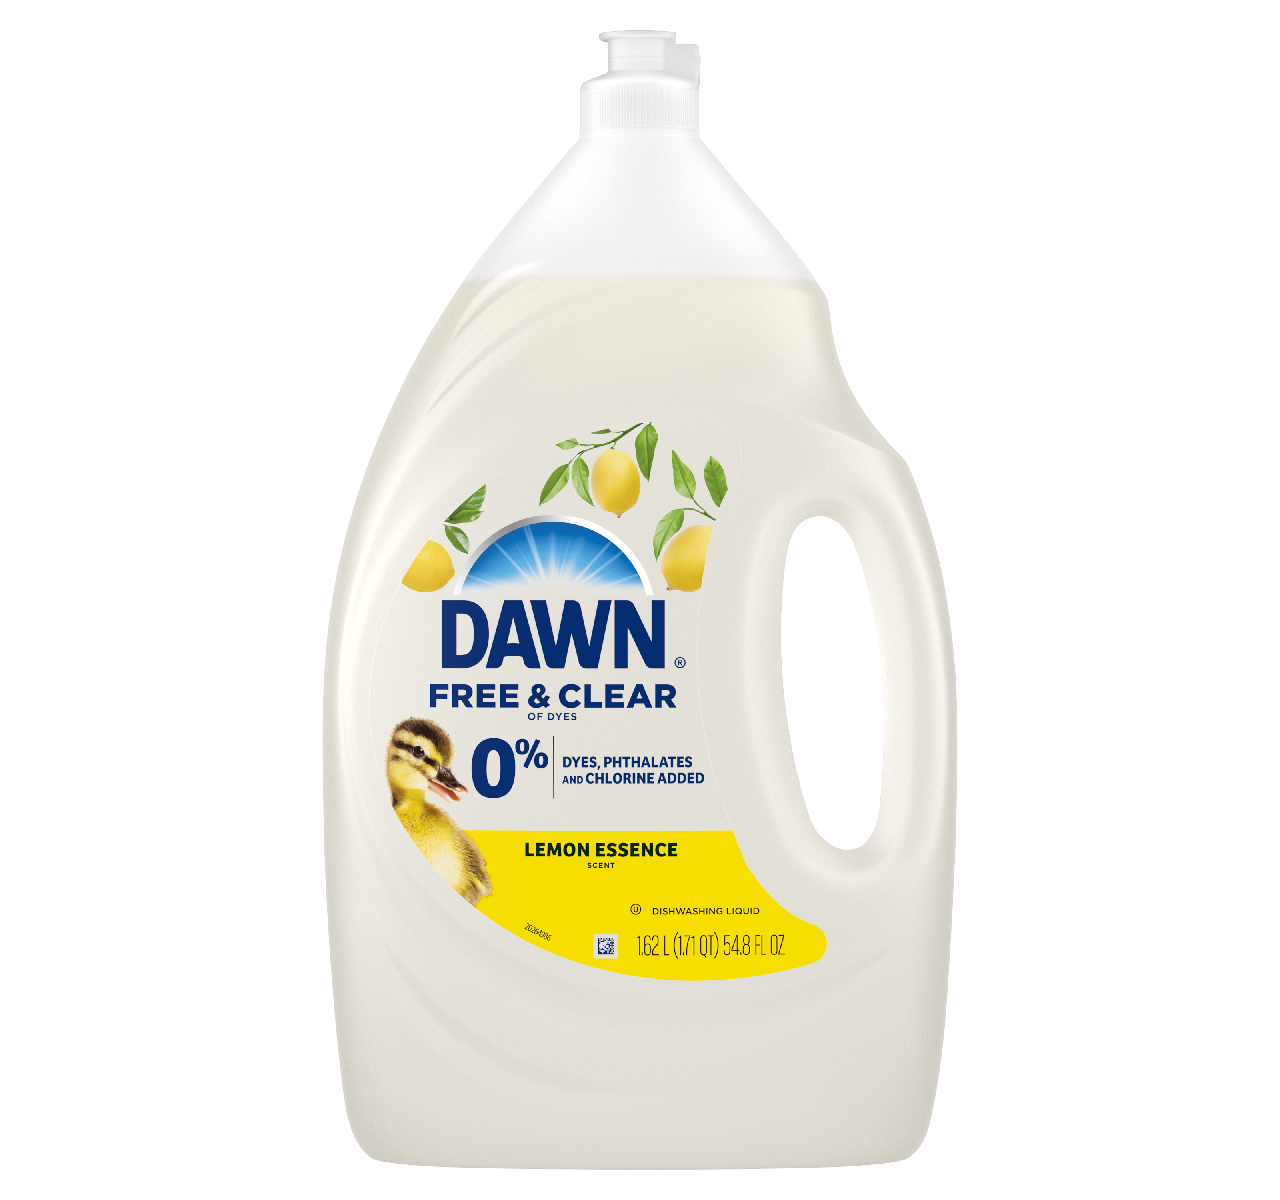 Dawn Free & Clear Dishwashing Liquid, Lemon Essence 54.8 oz